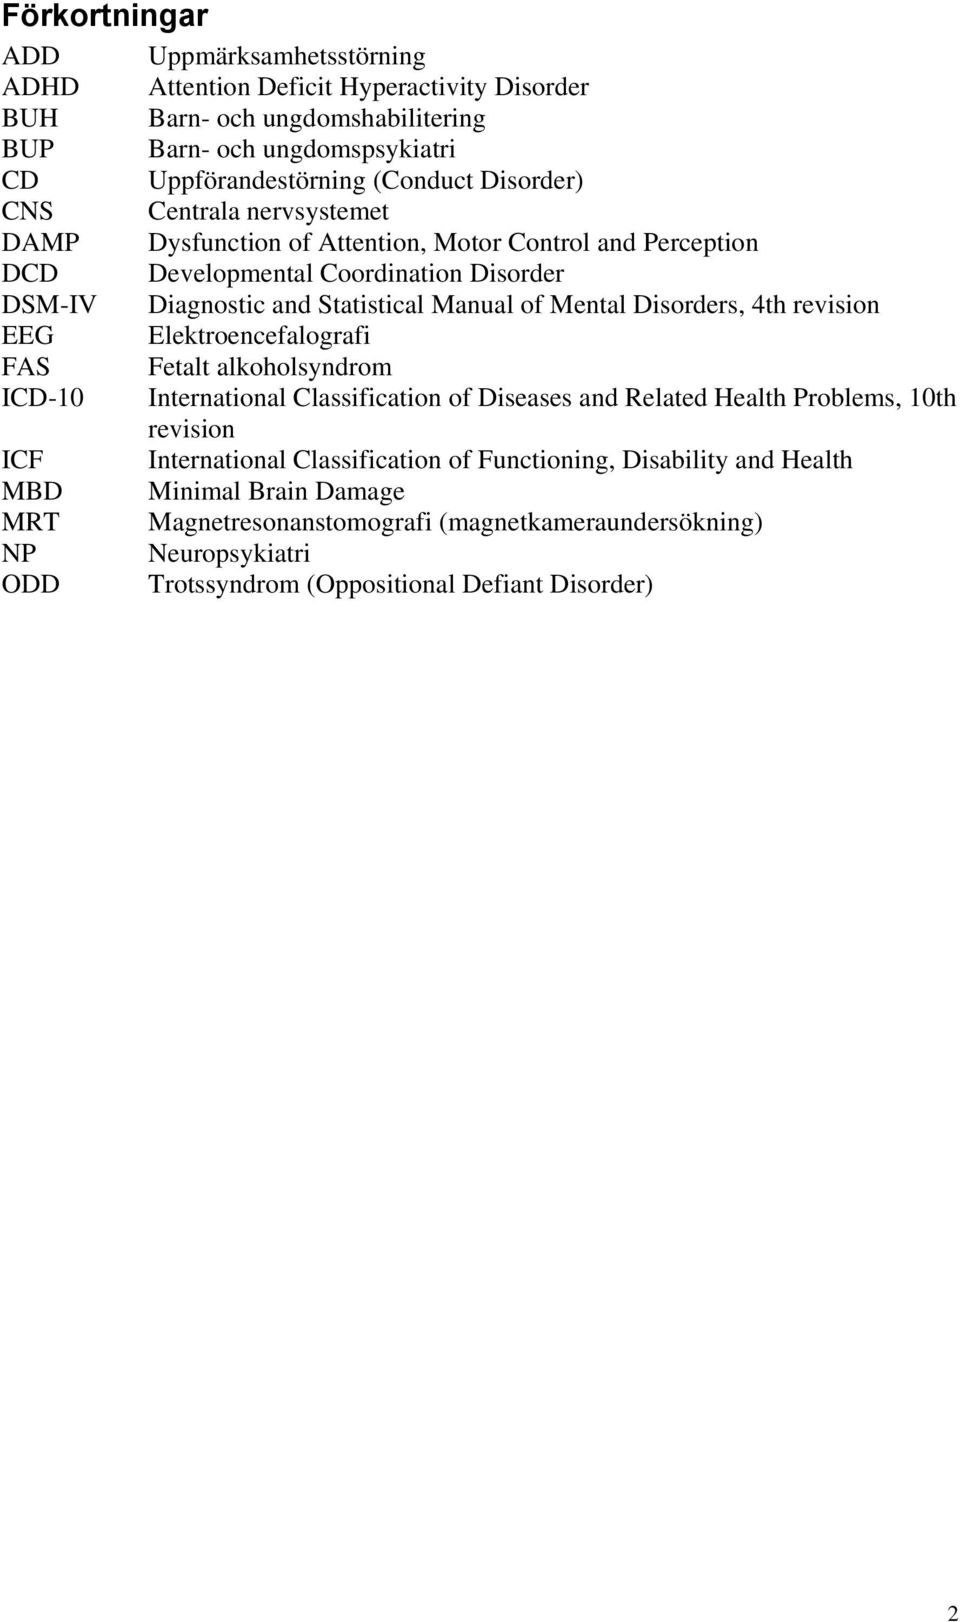 Disorders, 4th revision EEG Elektroencefalografi FAS Fetalt alkoholsyndrom ICD-10 International Classification of Diseases and Related Health Problems, 10th revision ICF International